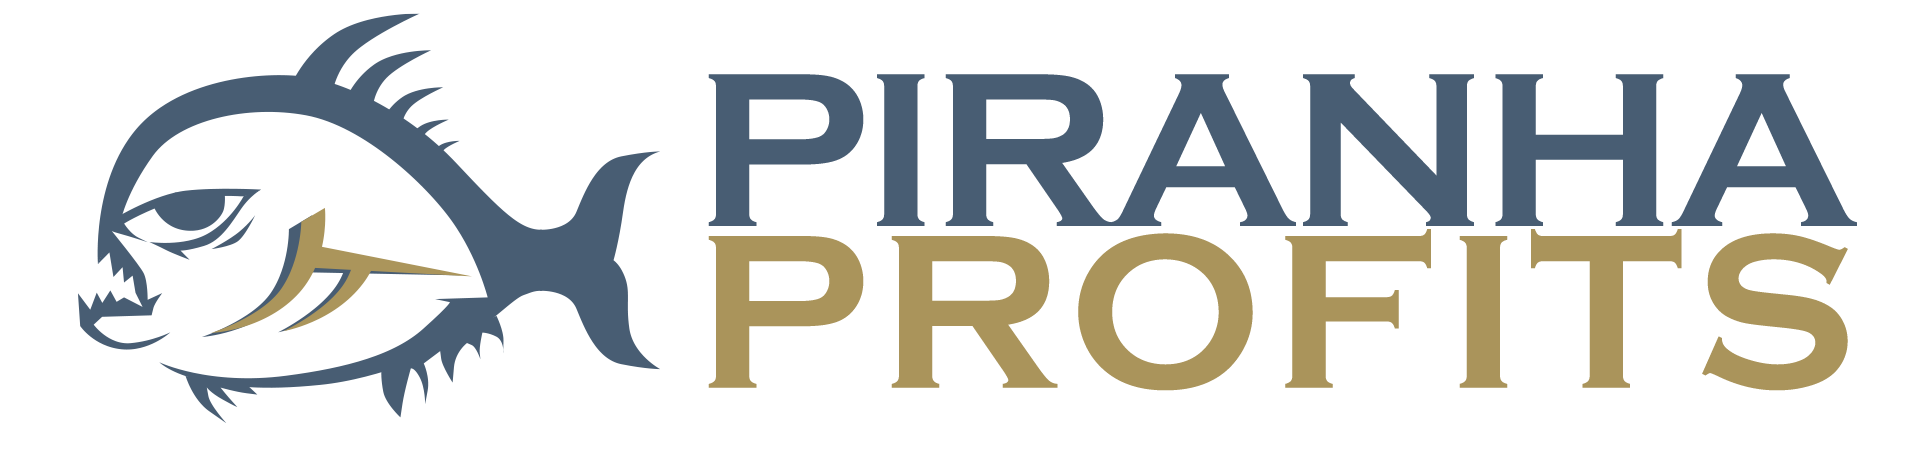 PP Logo Vertical-1